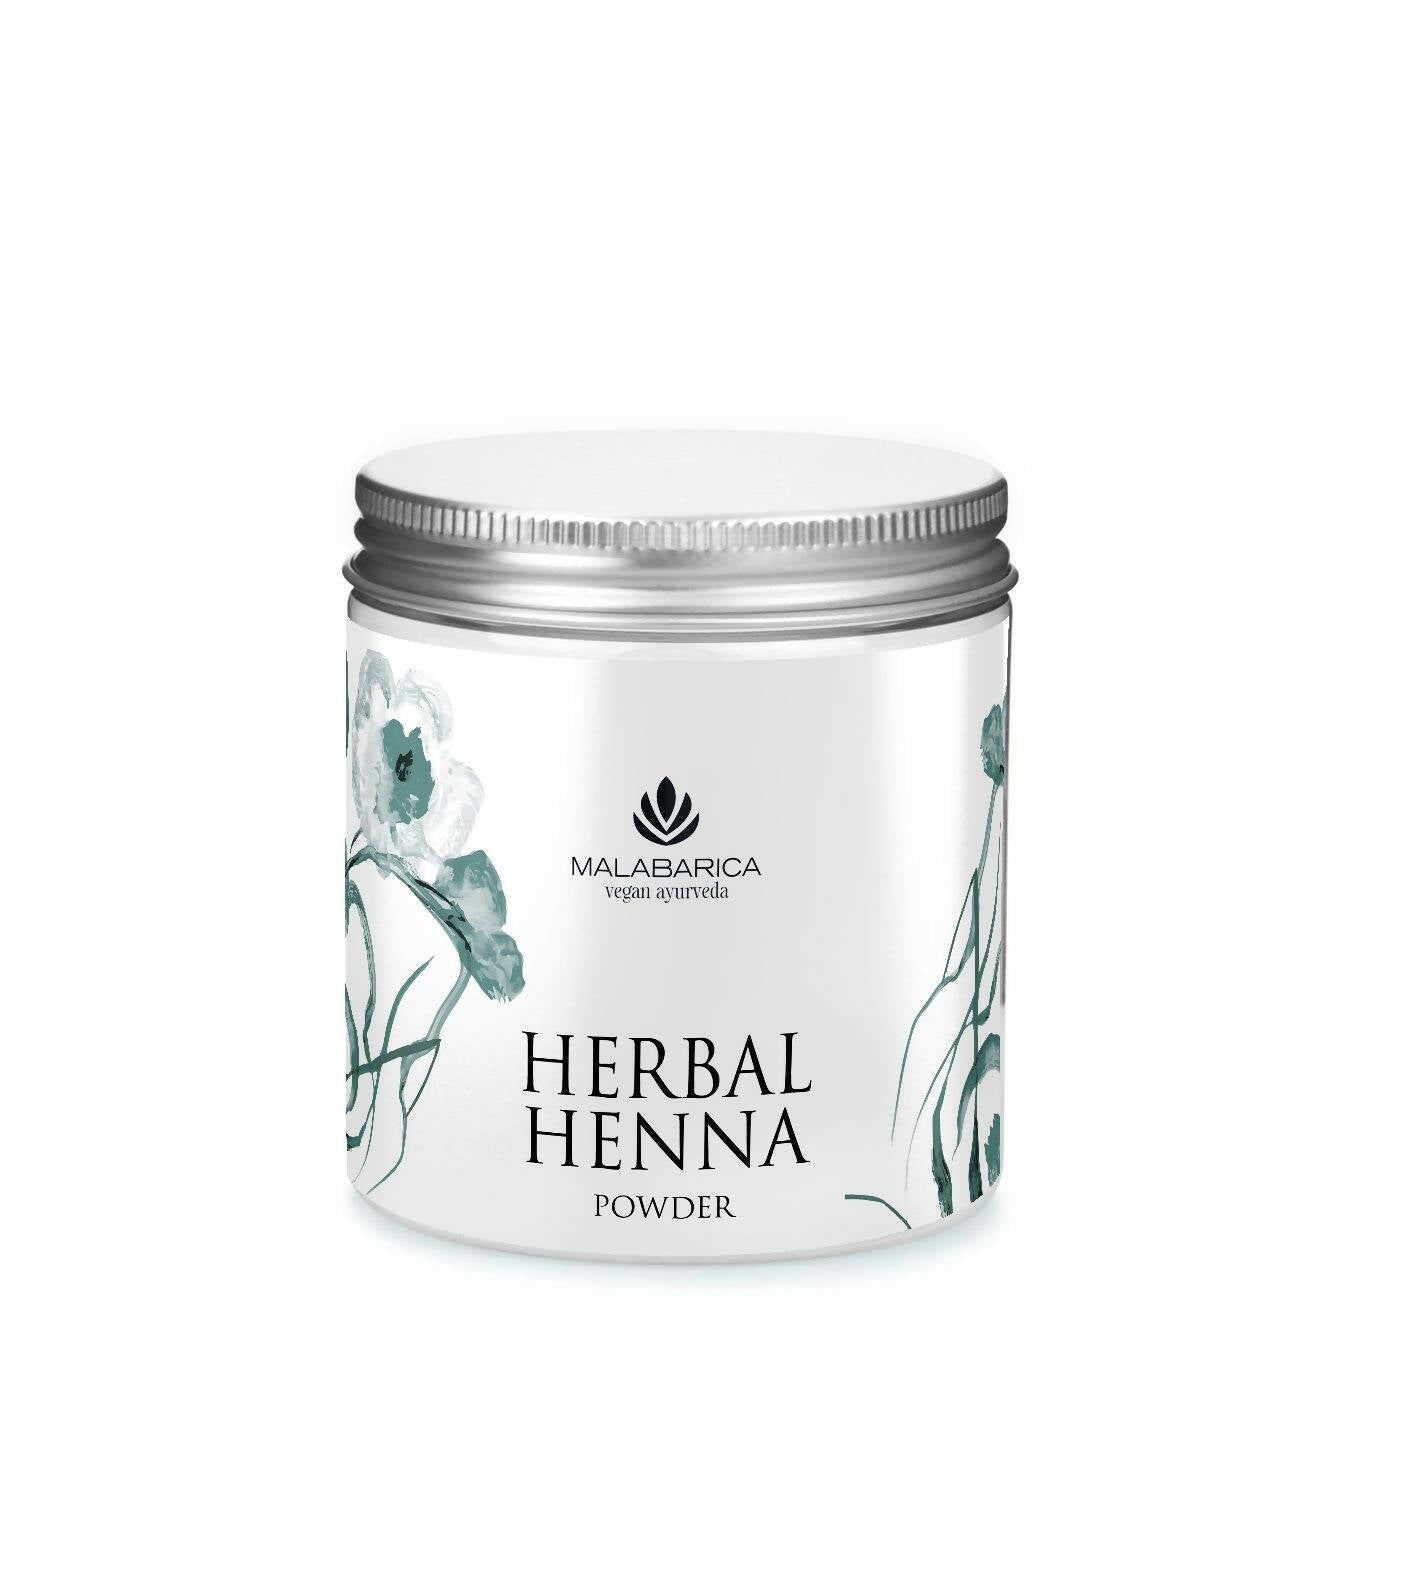 Malabarica Herbal Henna Powder